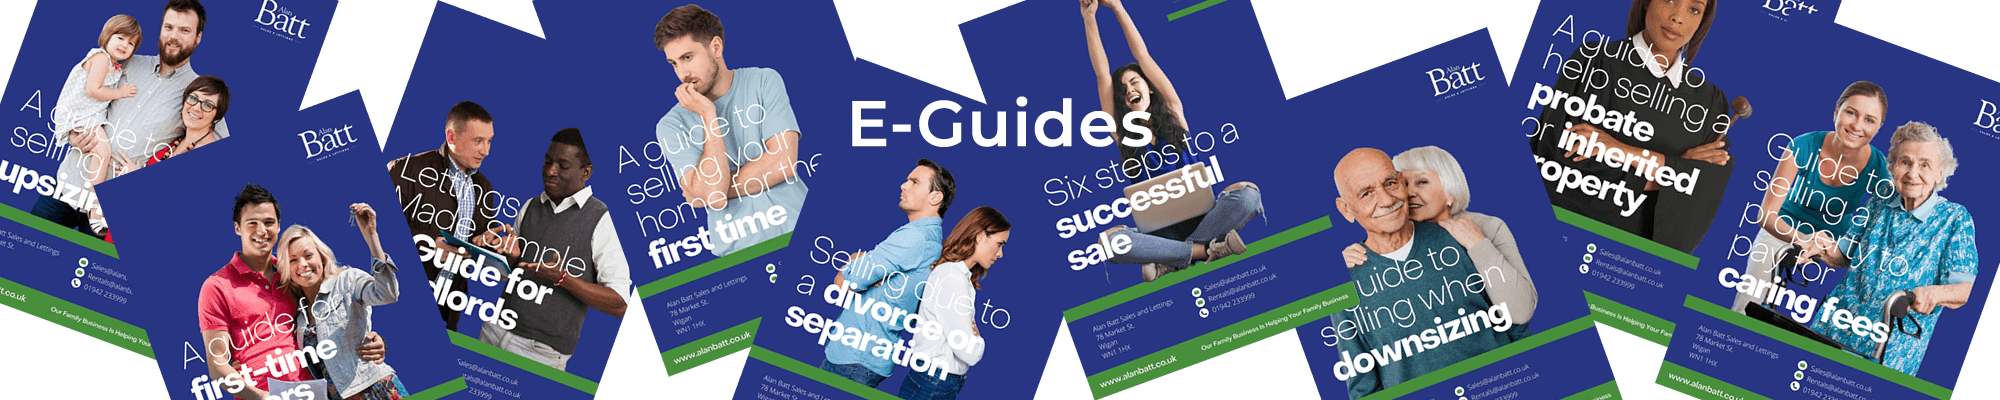 E-Guides